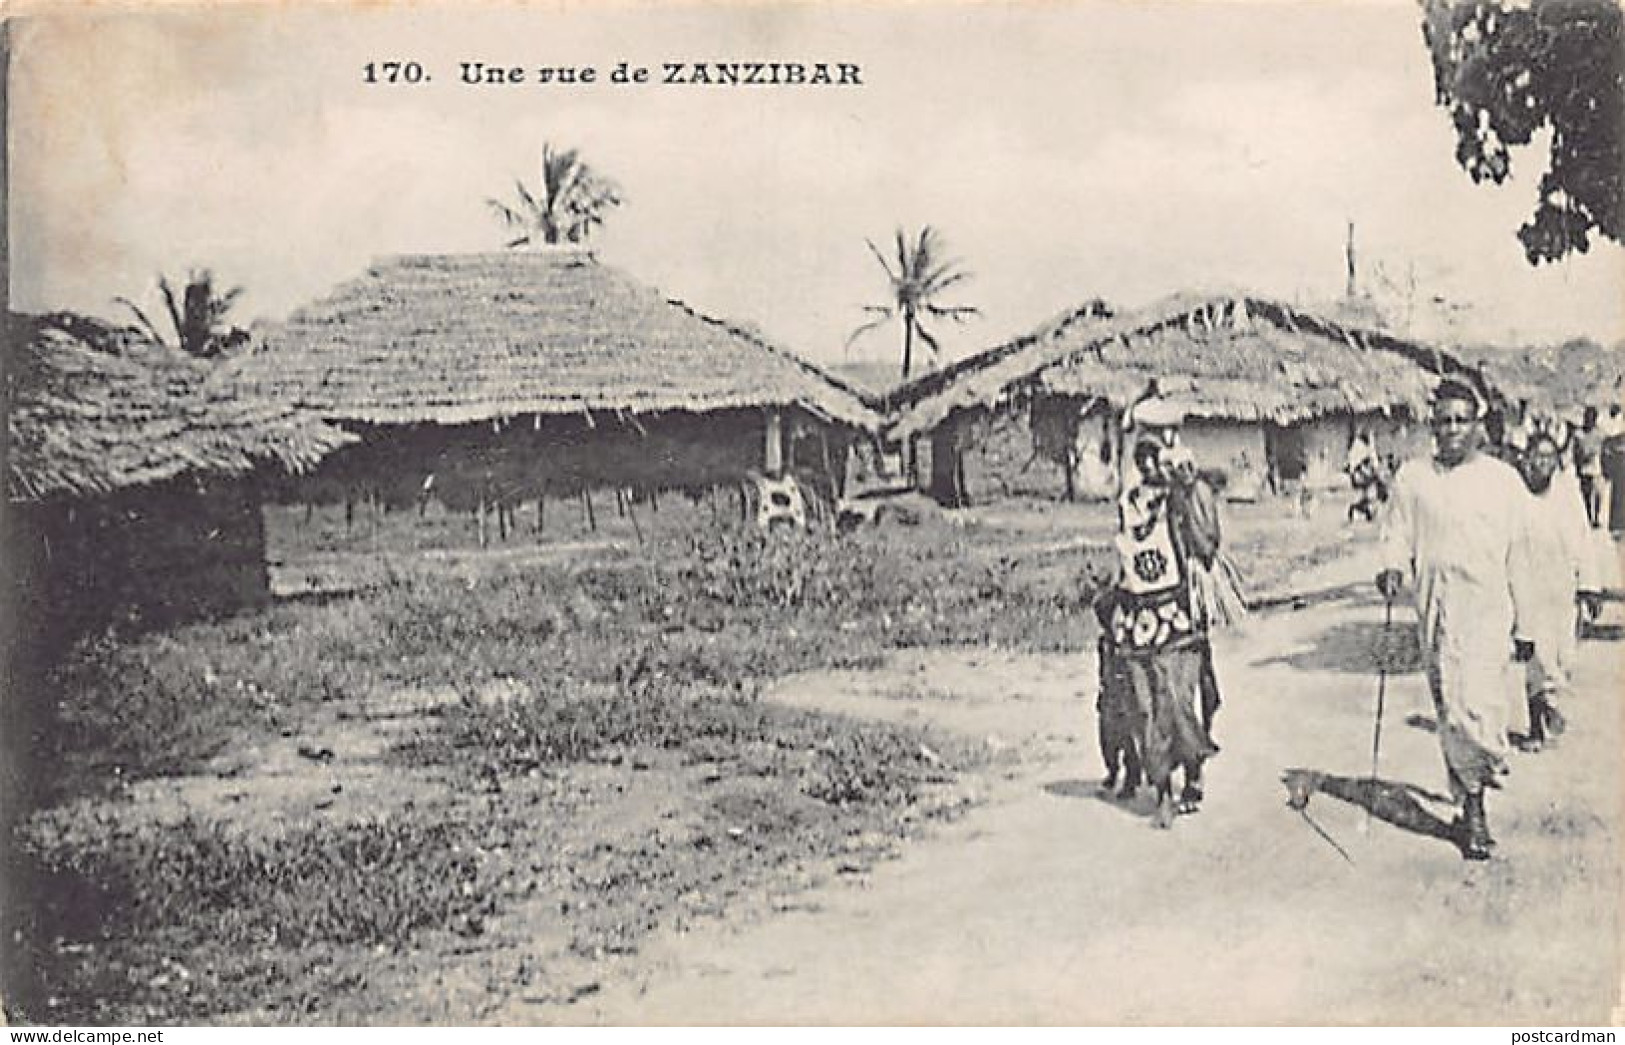 Tanzania - ZANZIBAR - A Street - Publ. Messageries Maritimes 170 - Tanzanie